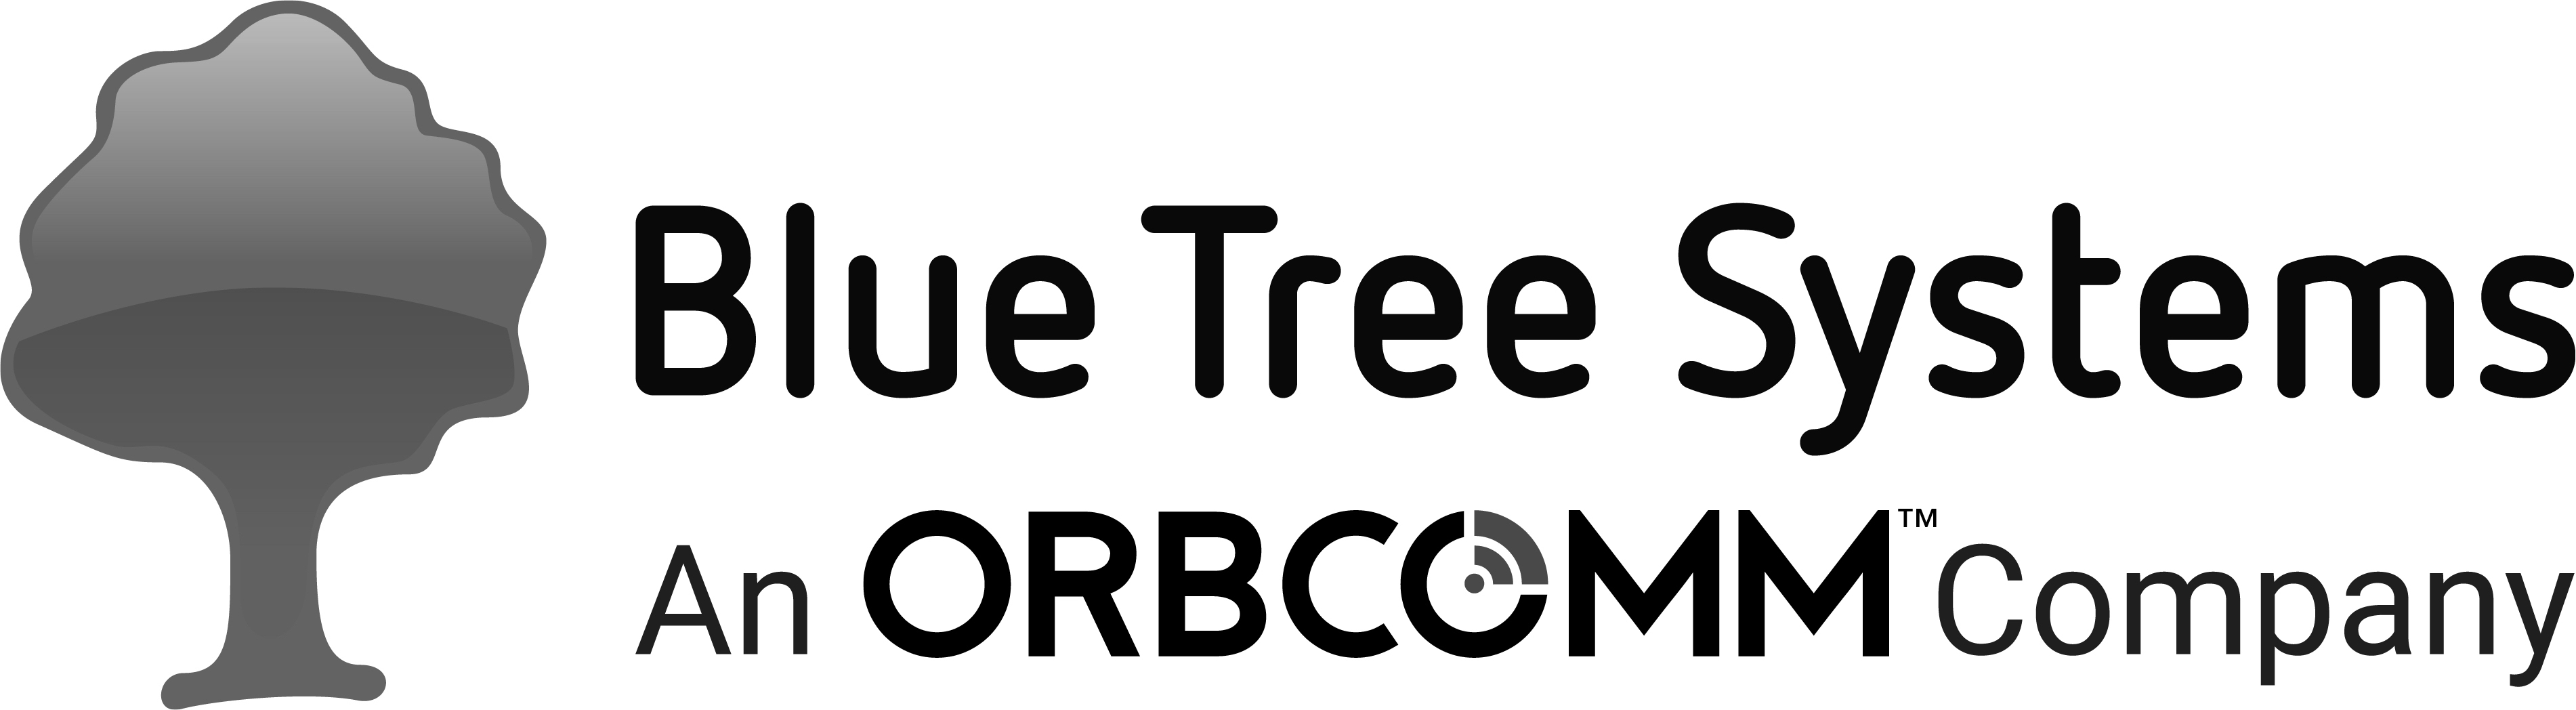 Blue Tree Systems GmbH